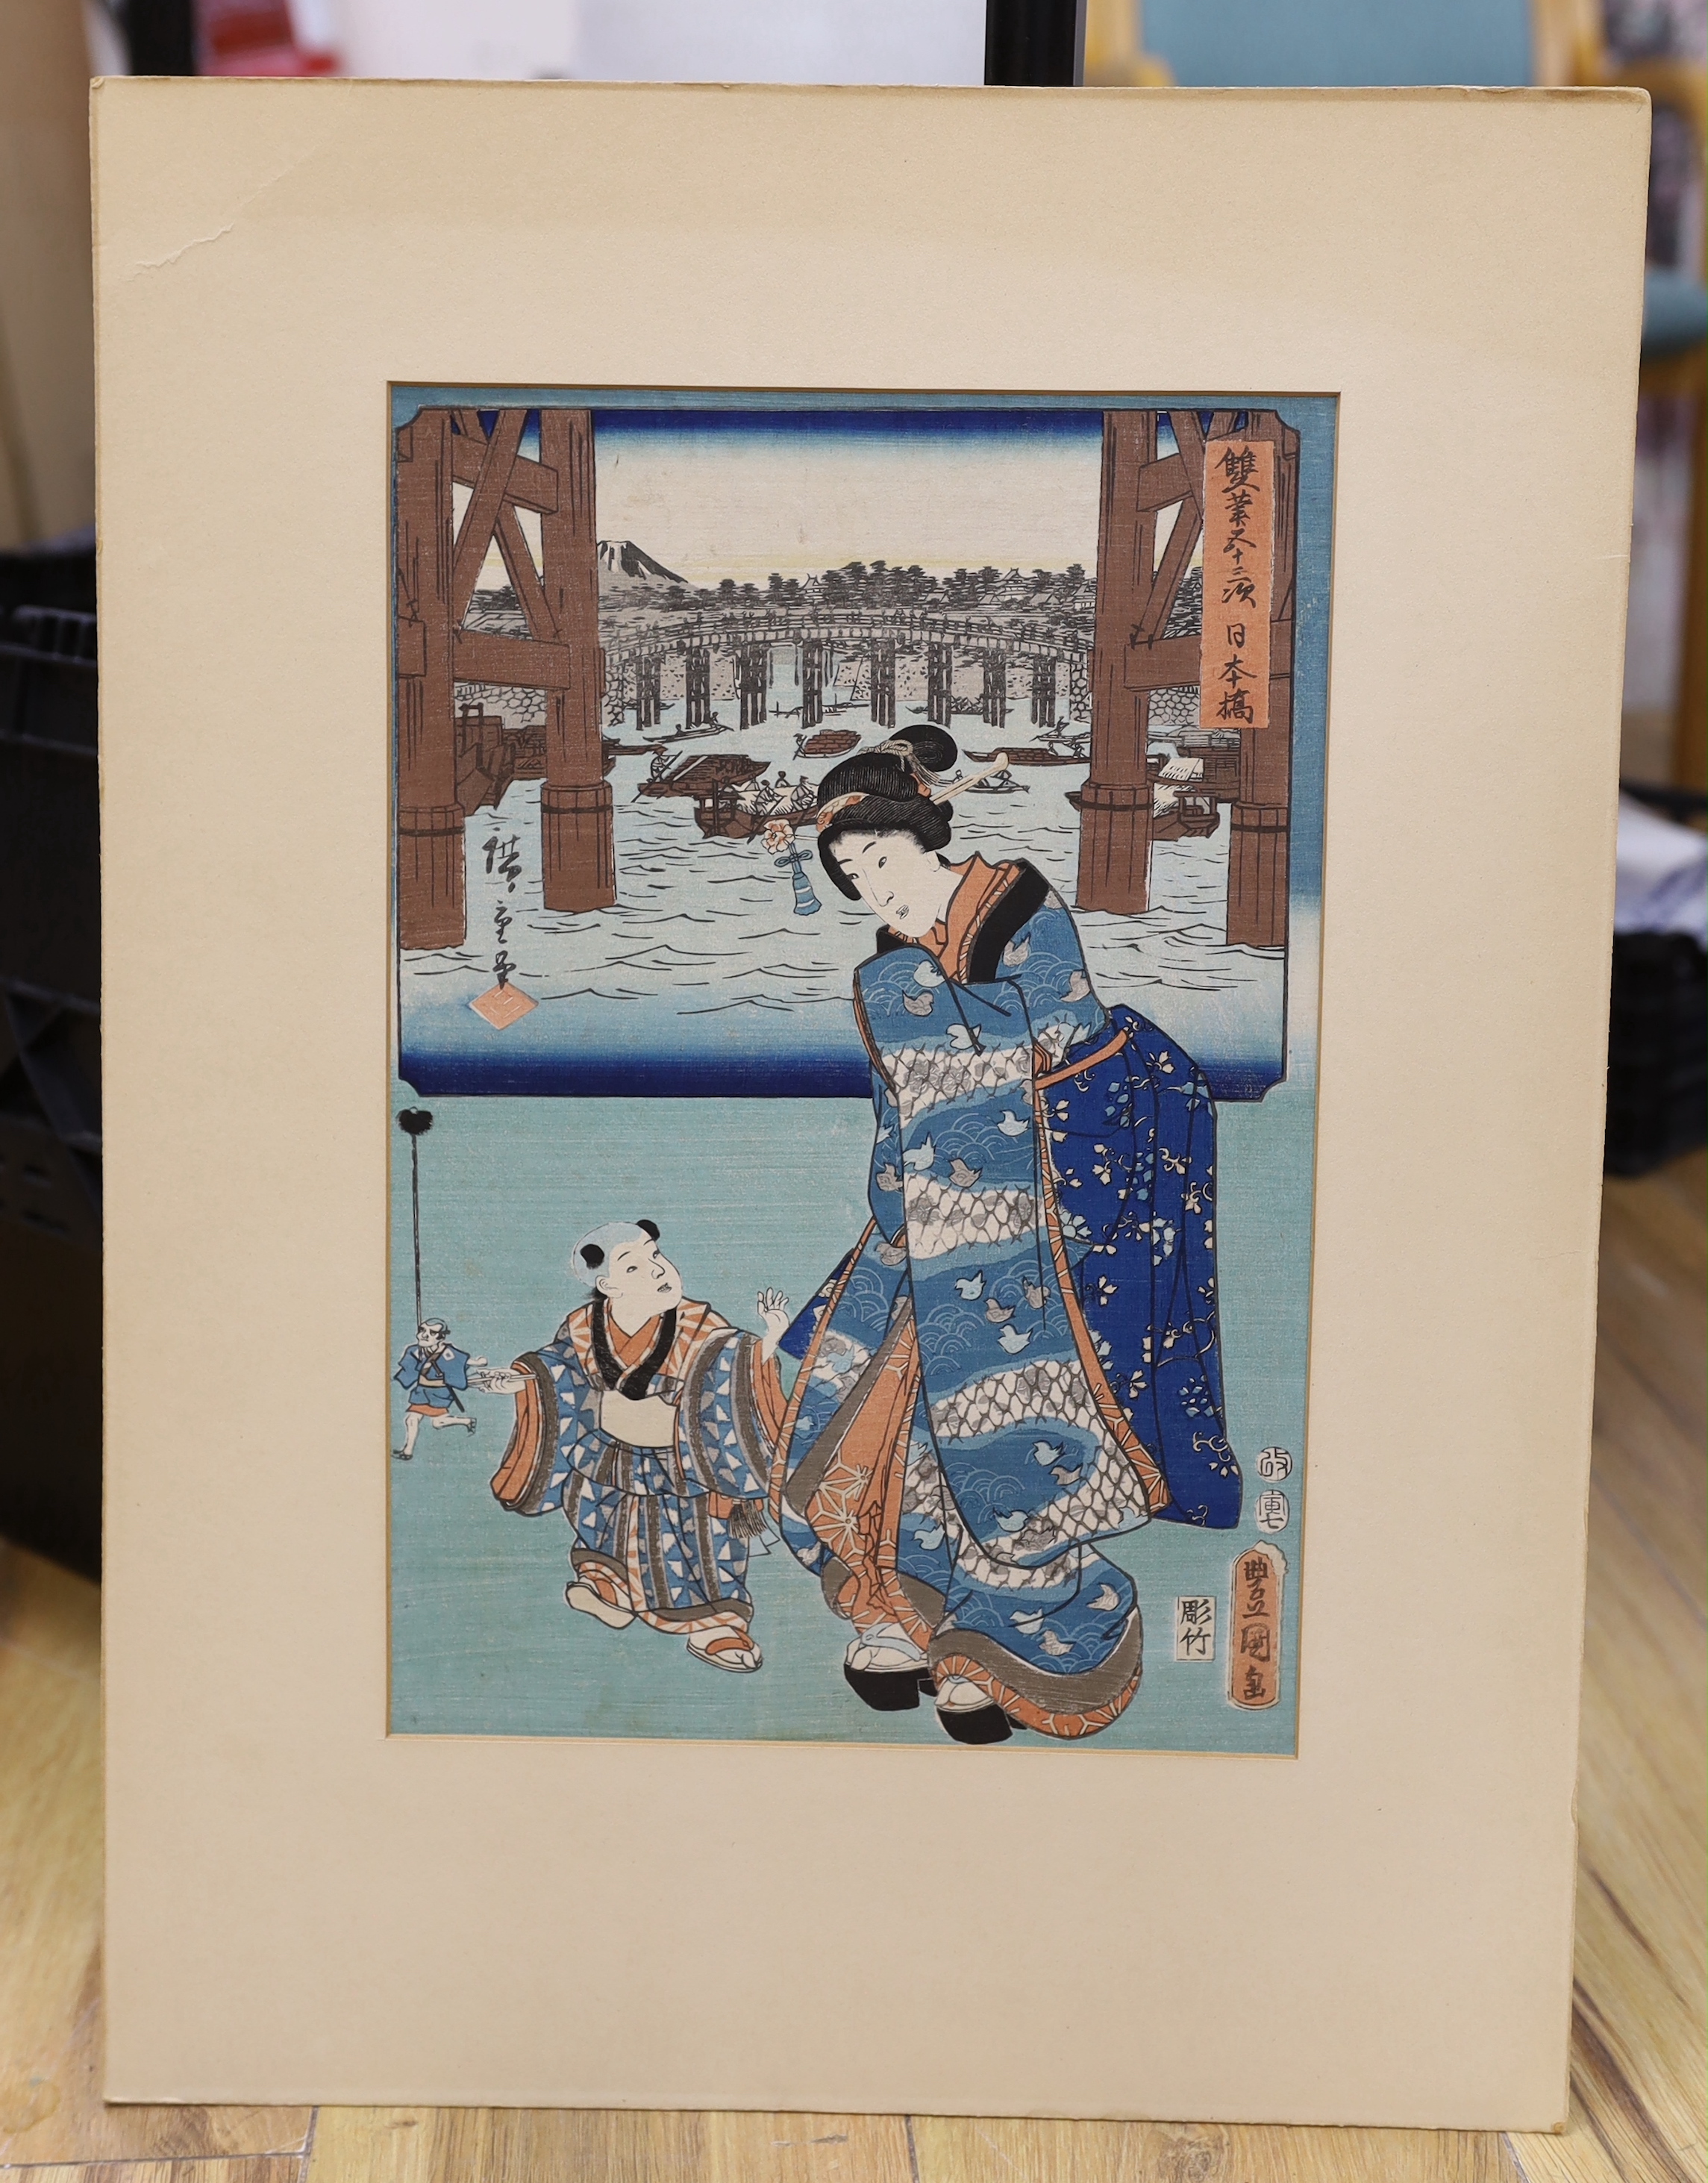 Utagawa Hiroshige (1797-1858), Japanese woodblock print, Nihonbashi, 36 x 24cm - Image 2 of 2